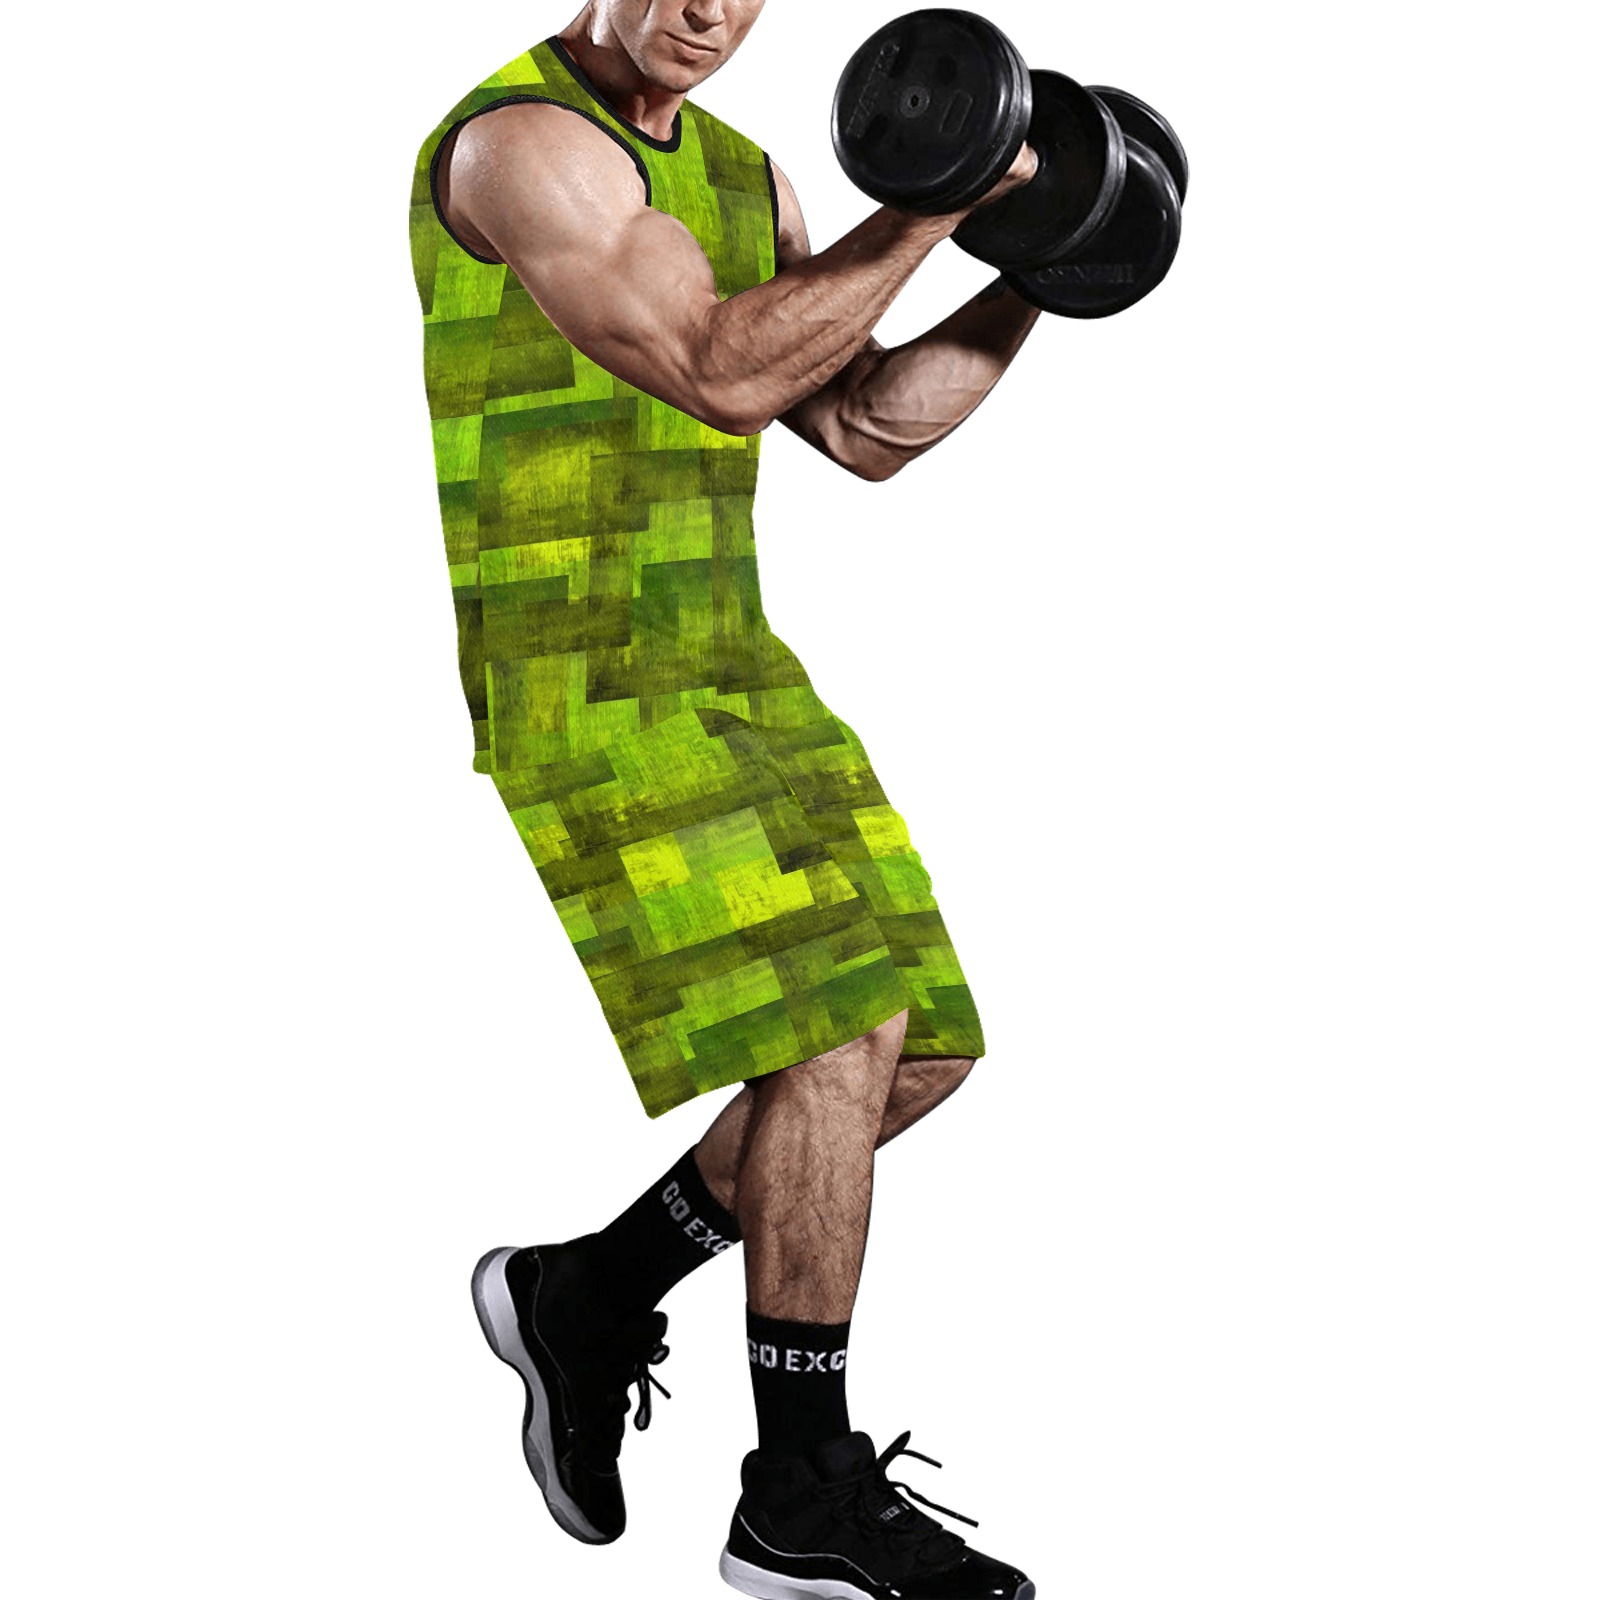 pixels2 green All Over Print Basketball Uniform